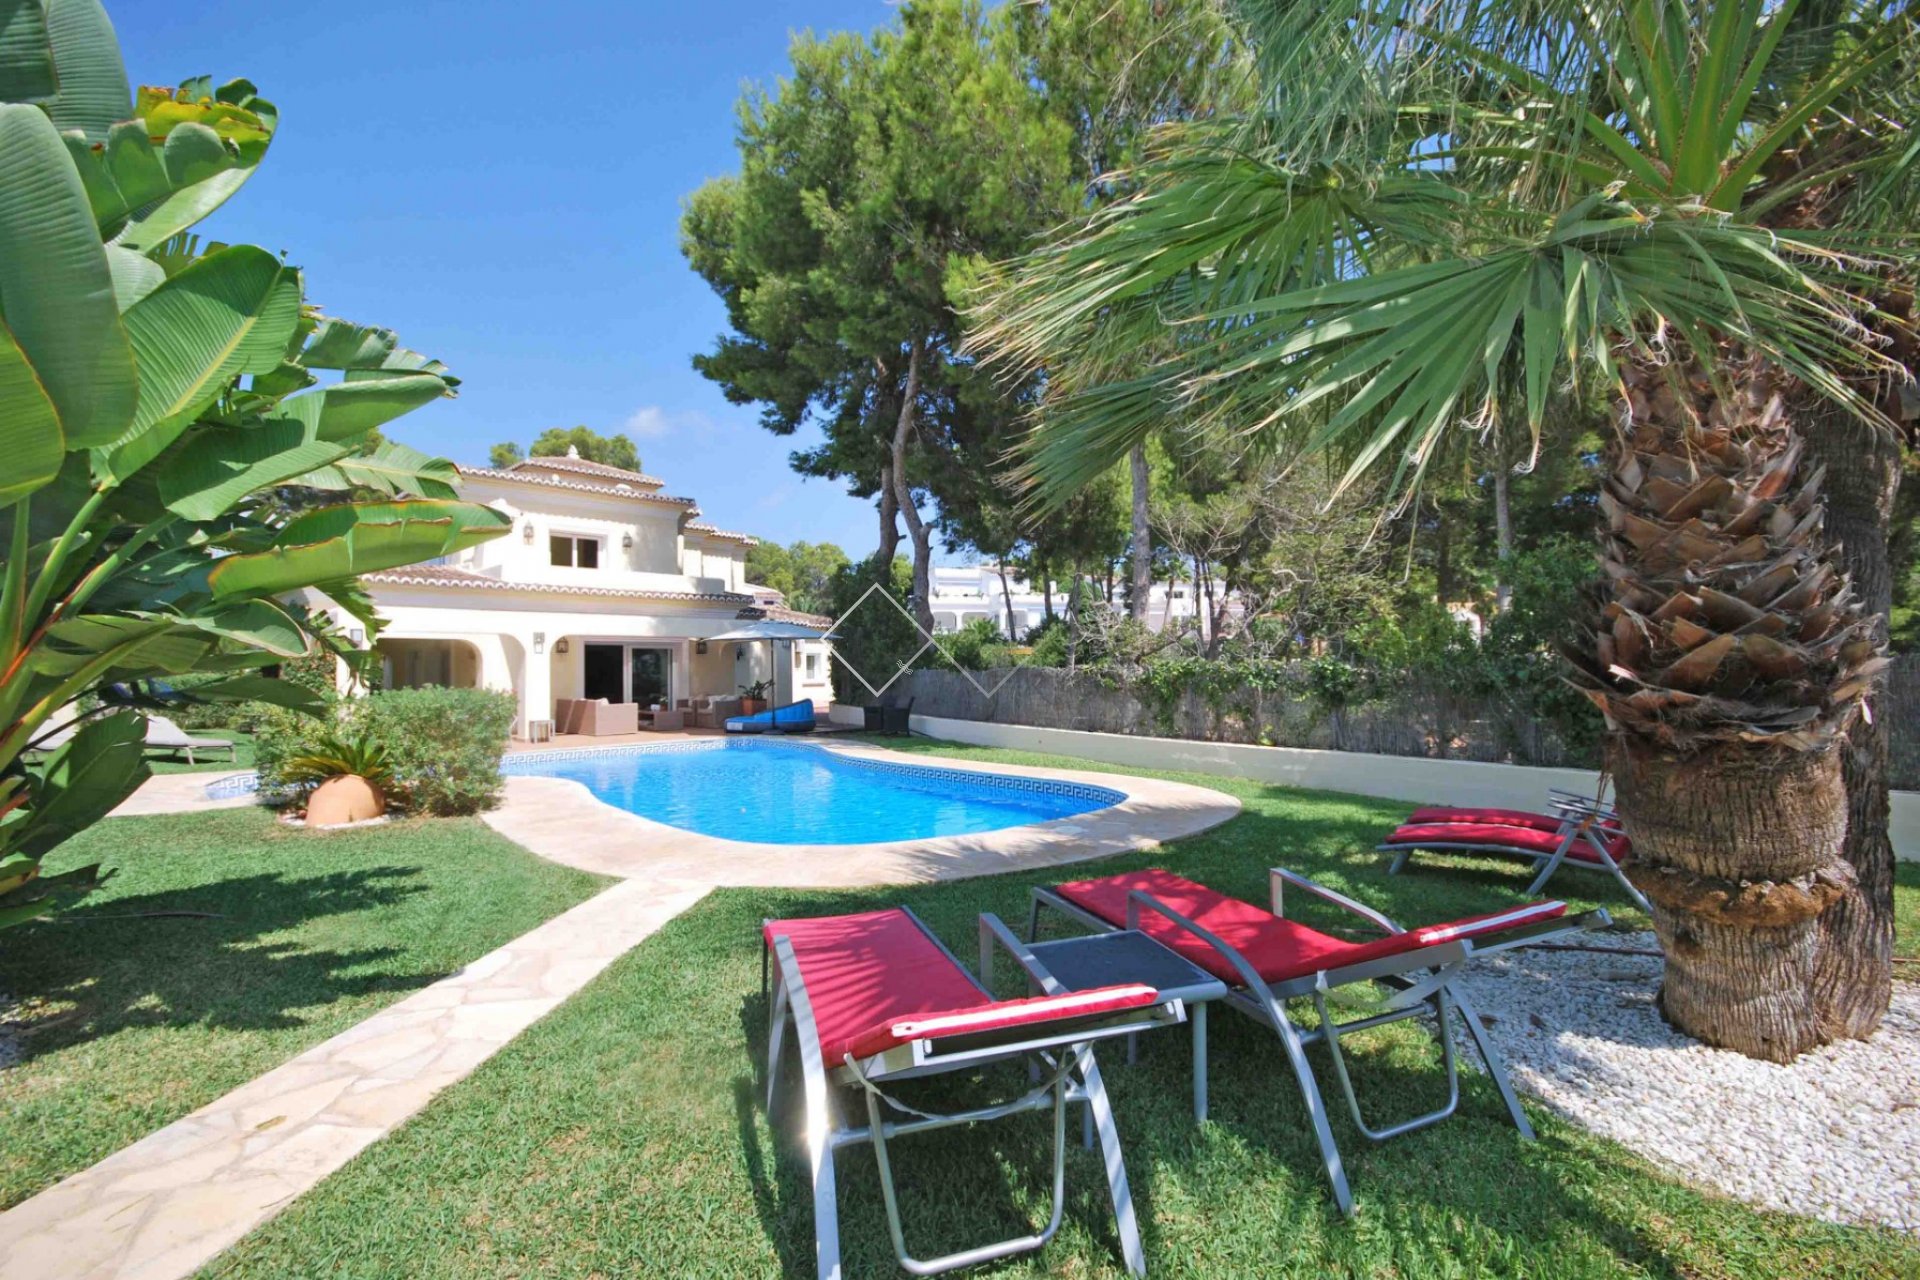 lawned garden - Luxurious villa for sale in El Portet, Moraira